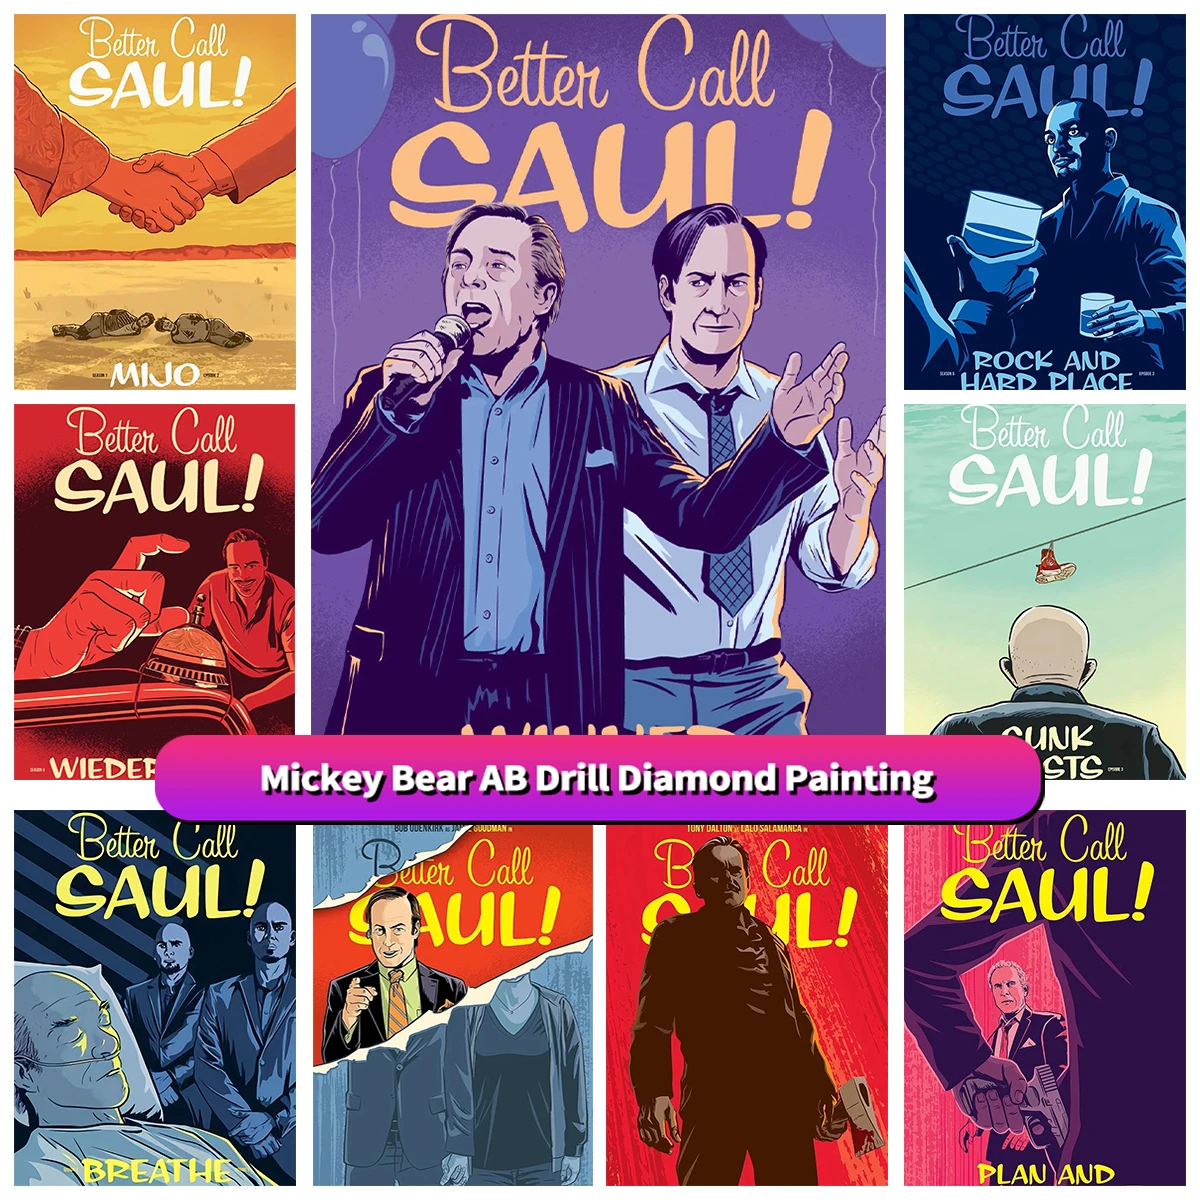 

Comedy Crime TV Series Better Call Saul DIY Diamond Mosaic Painting Jimmy McGill Portrait Full Drills Cross Stitch Home Decor